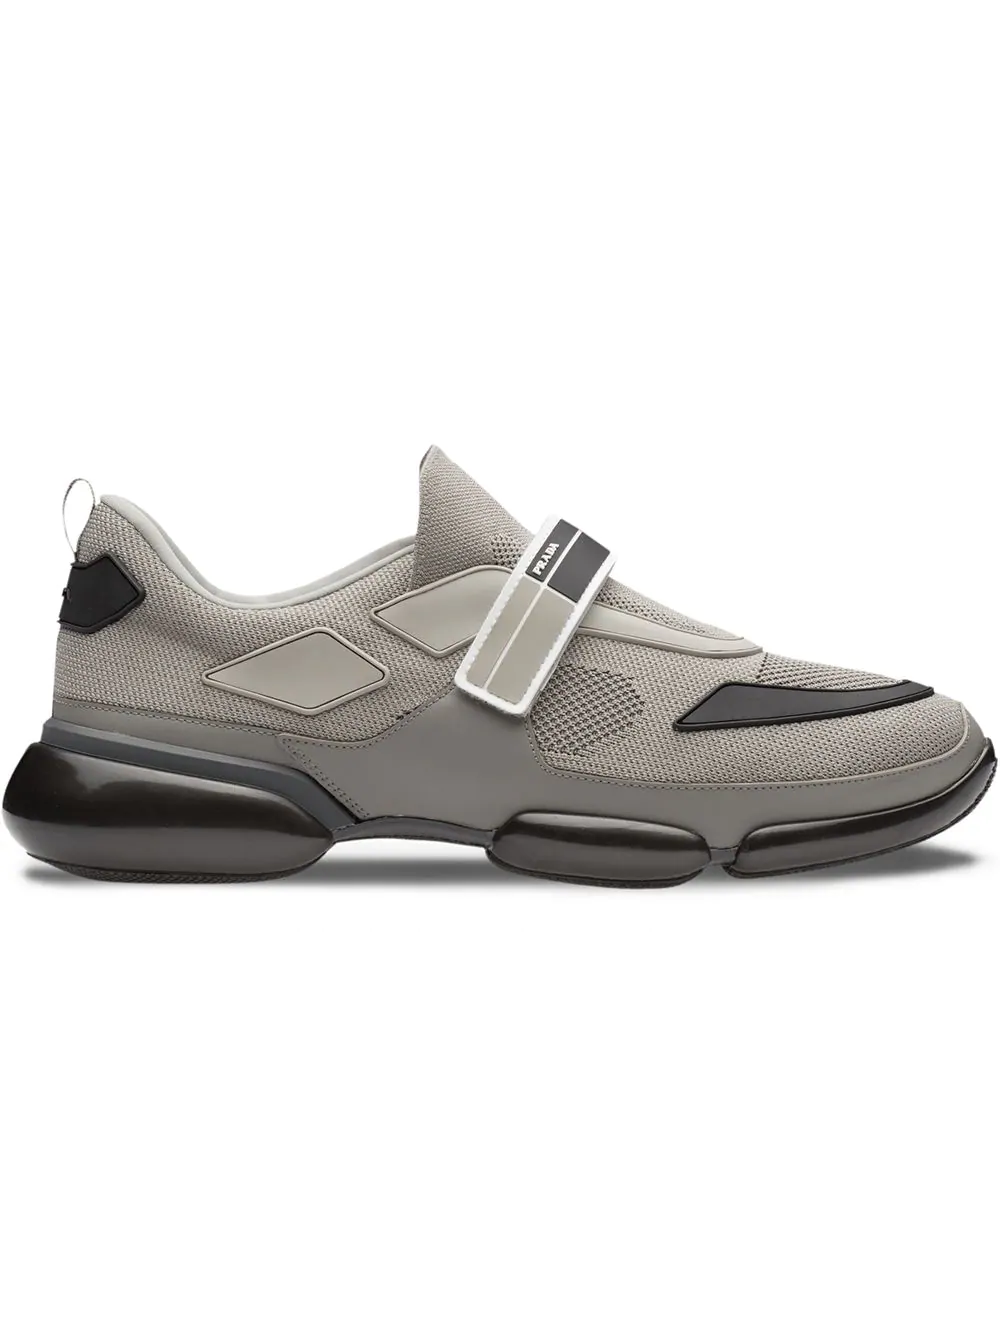 Prada Cloudbust Sneakers - Grey | ModeSens